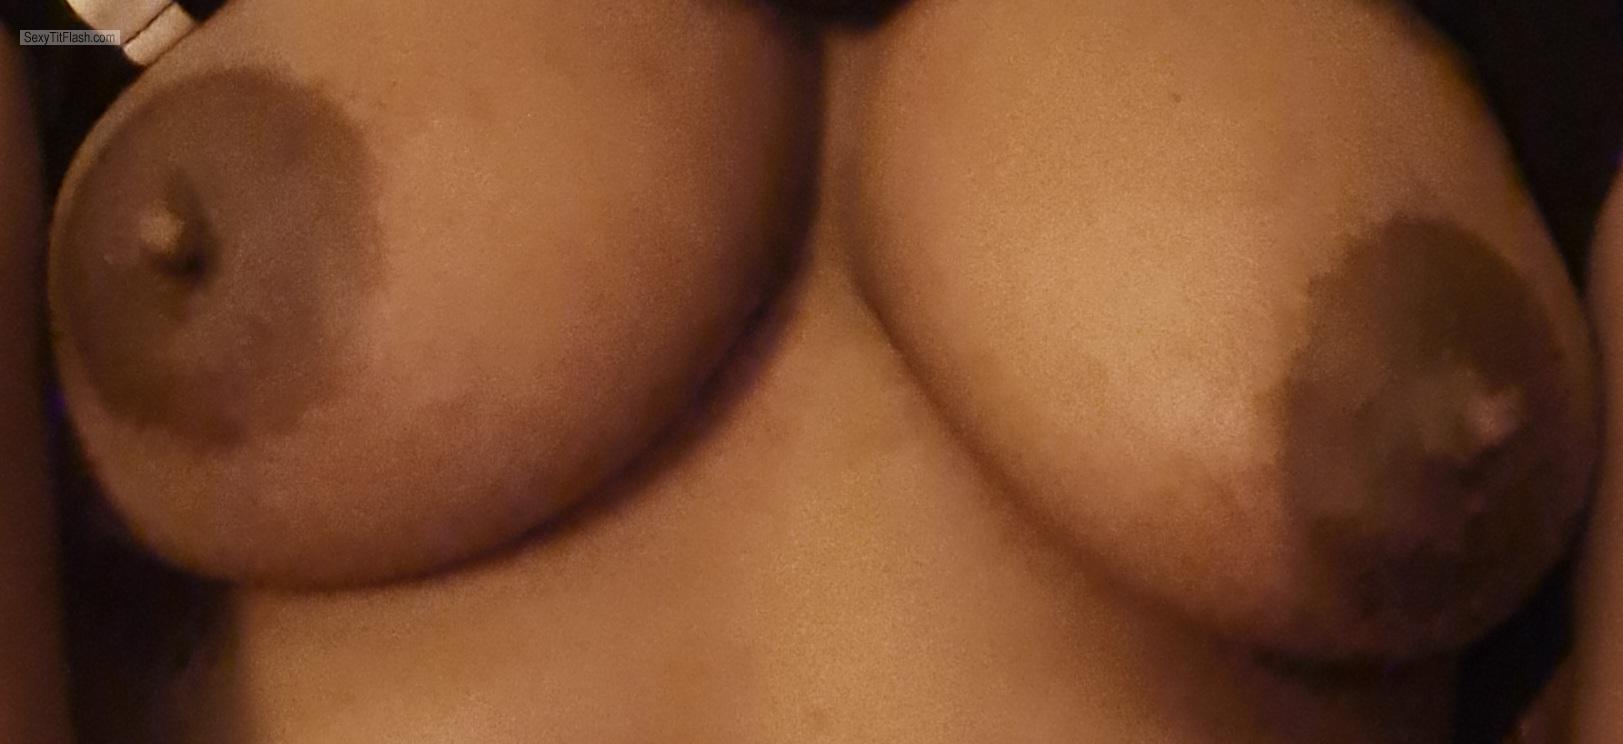 Tit Flash: My Big Tits (Selfie) - Busty Slut from Singapore